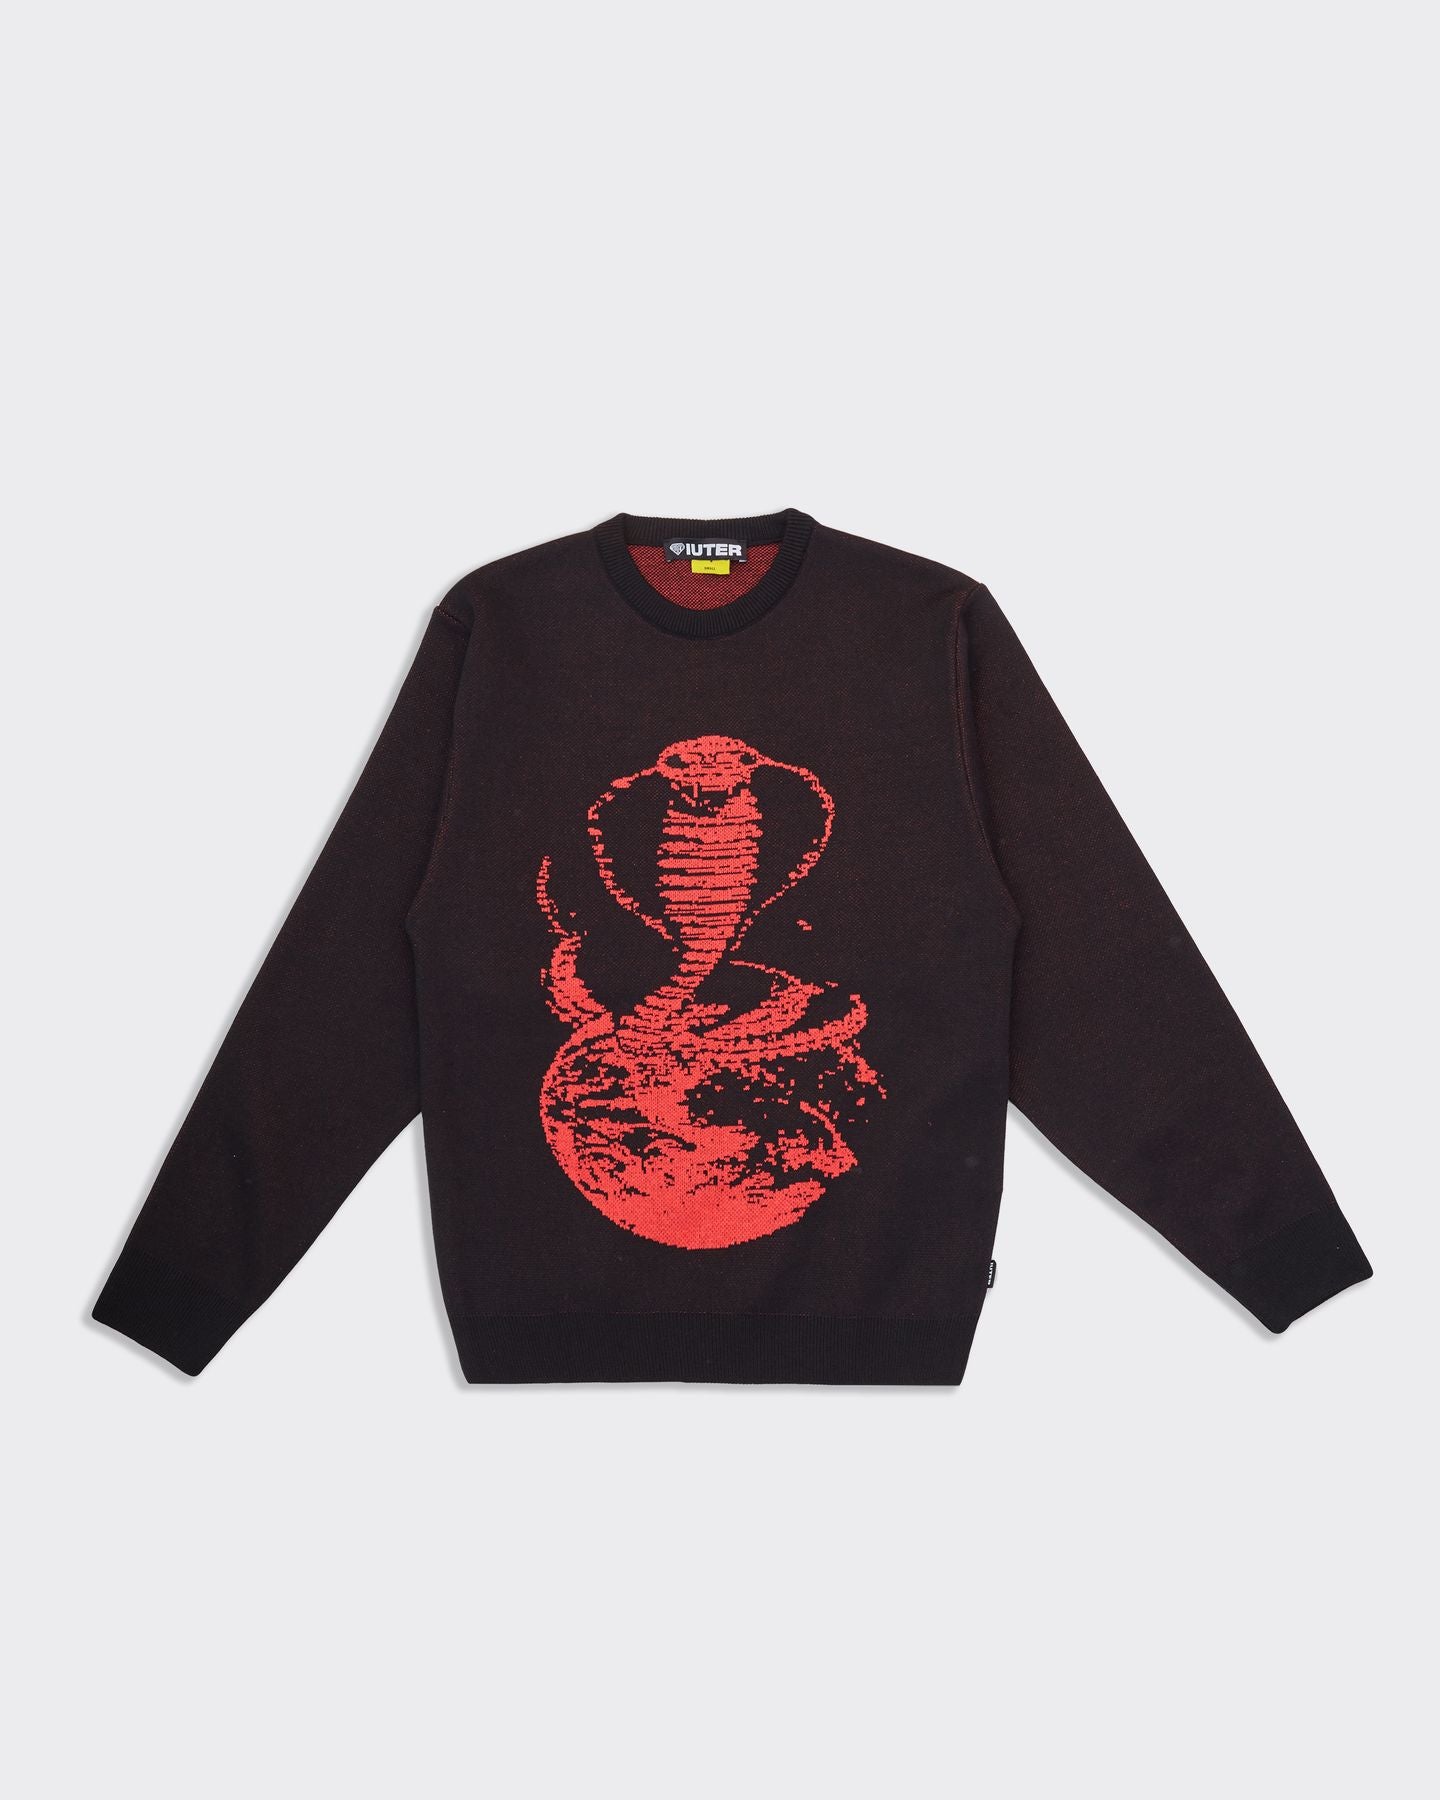 Cobra Black crewneck sweater